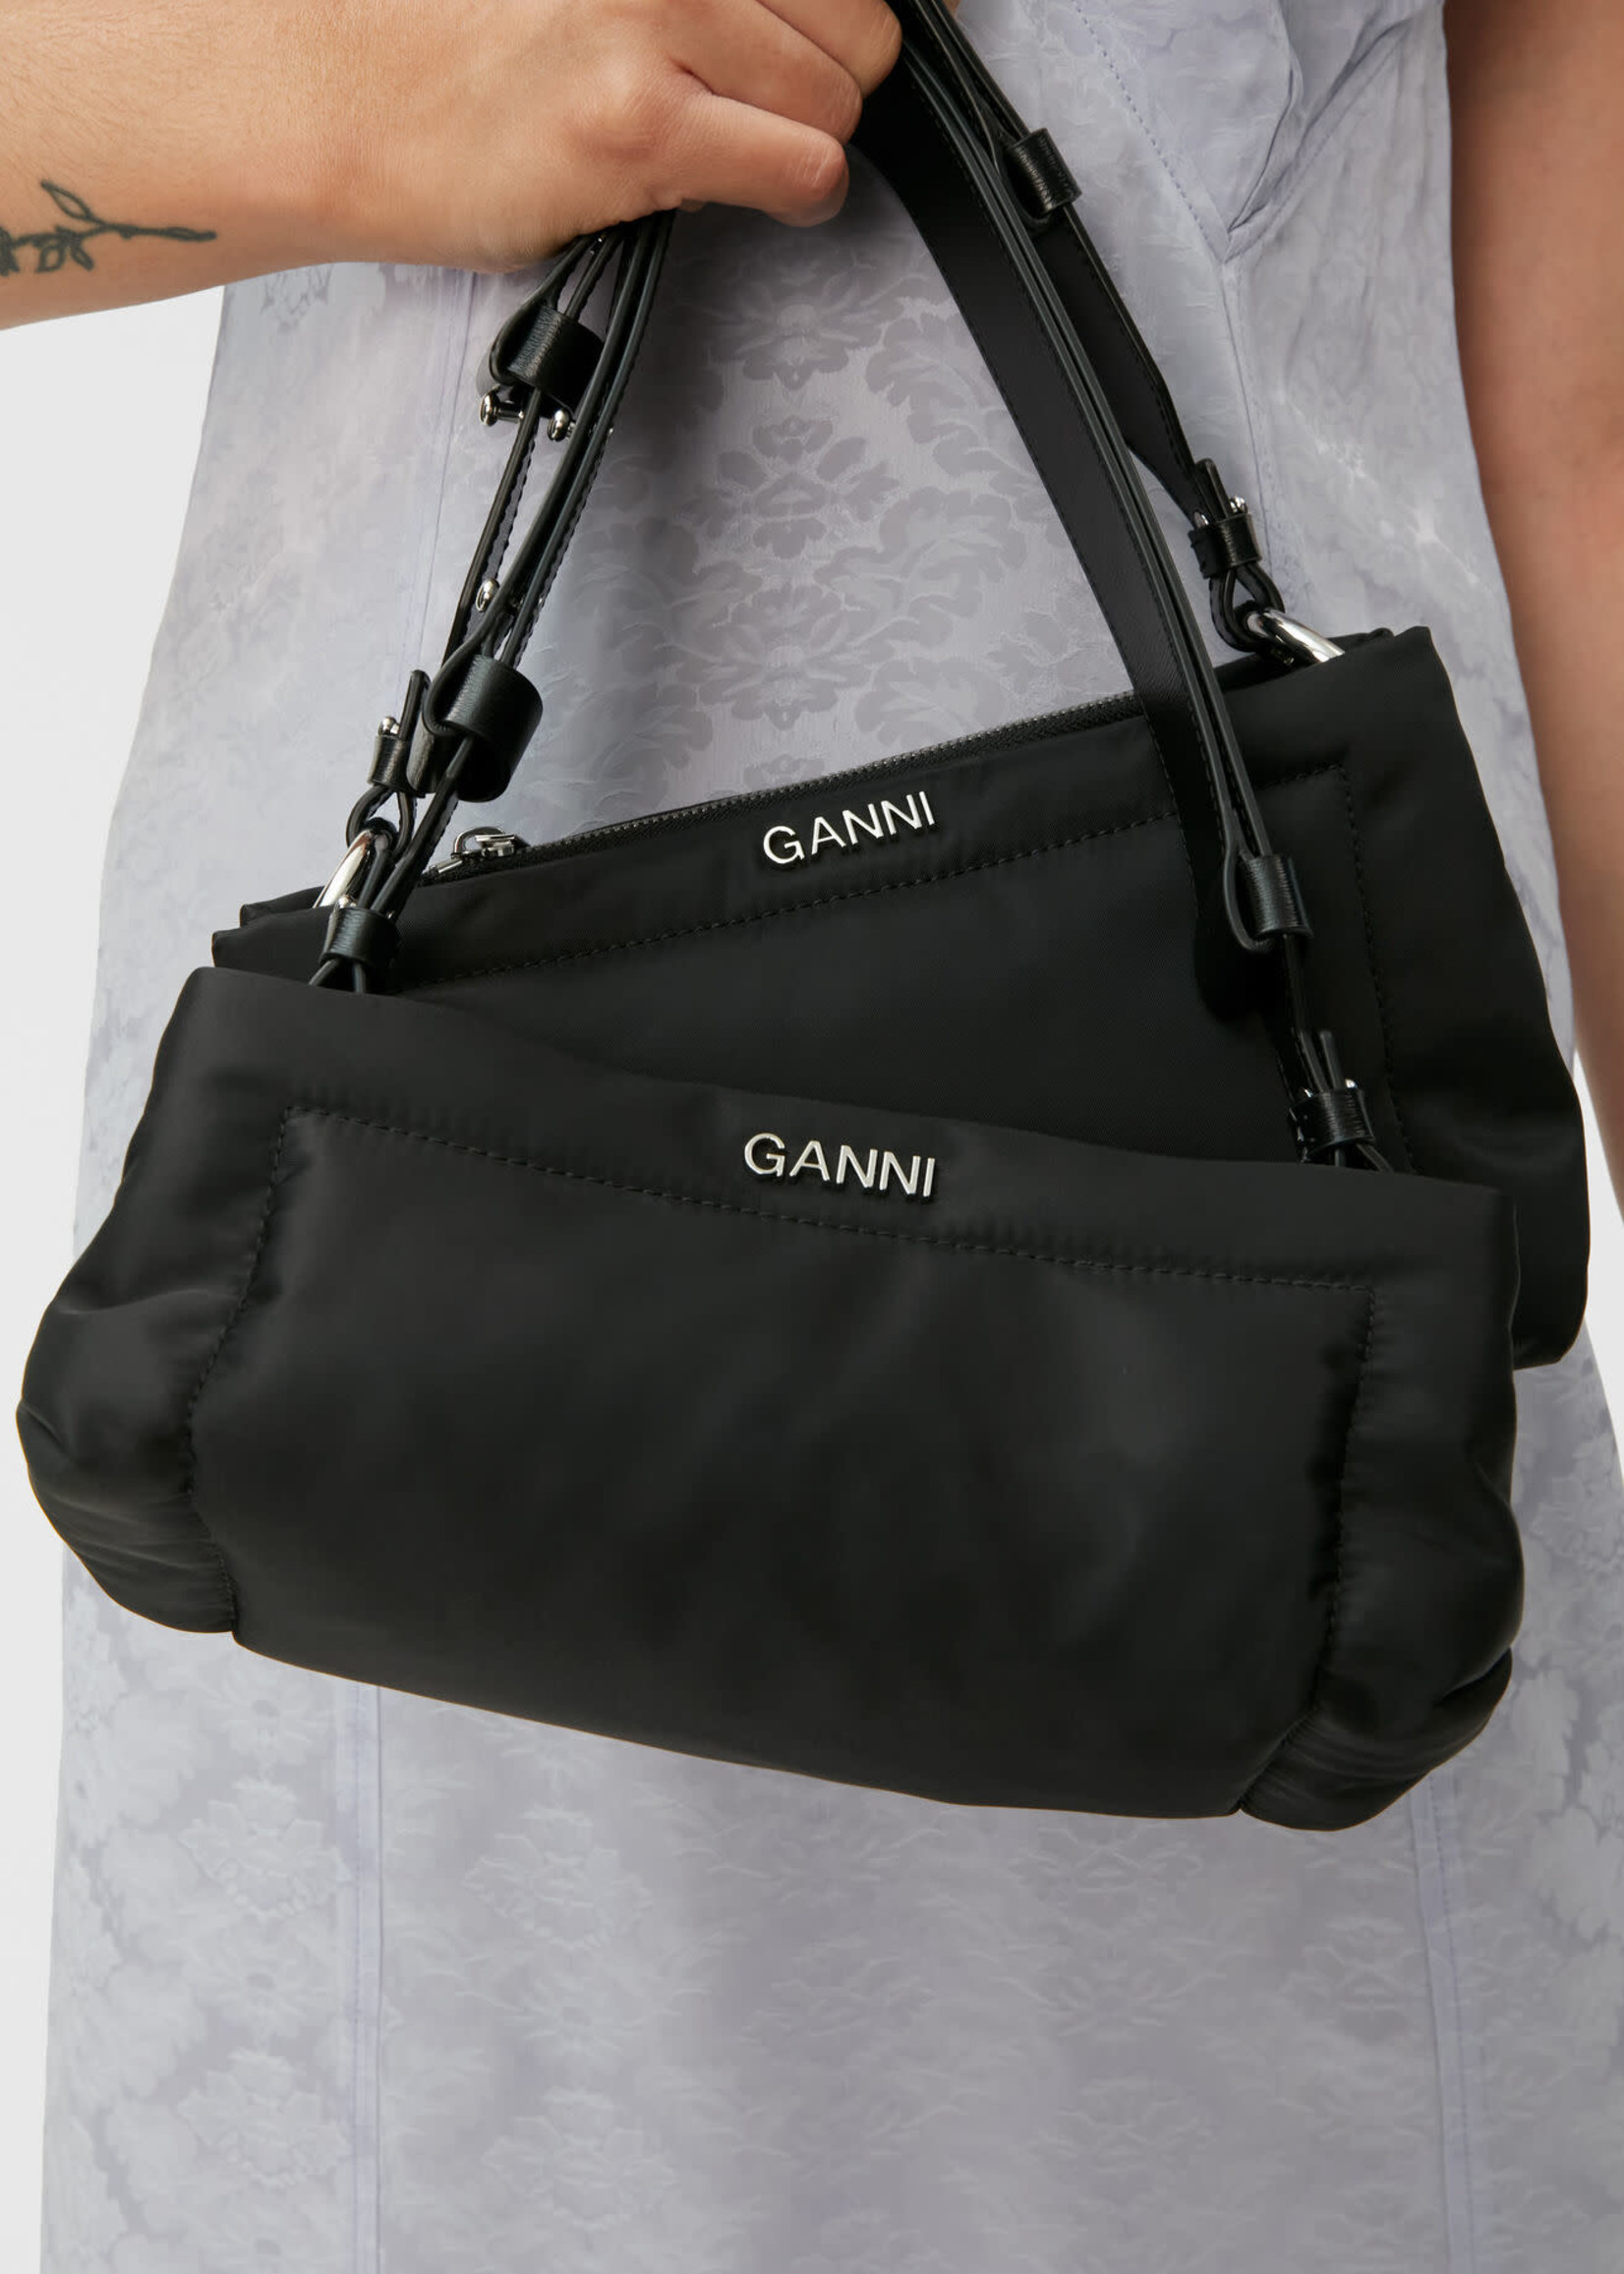 GANNI Mini Pillow Baguette Bag in Black